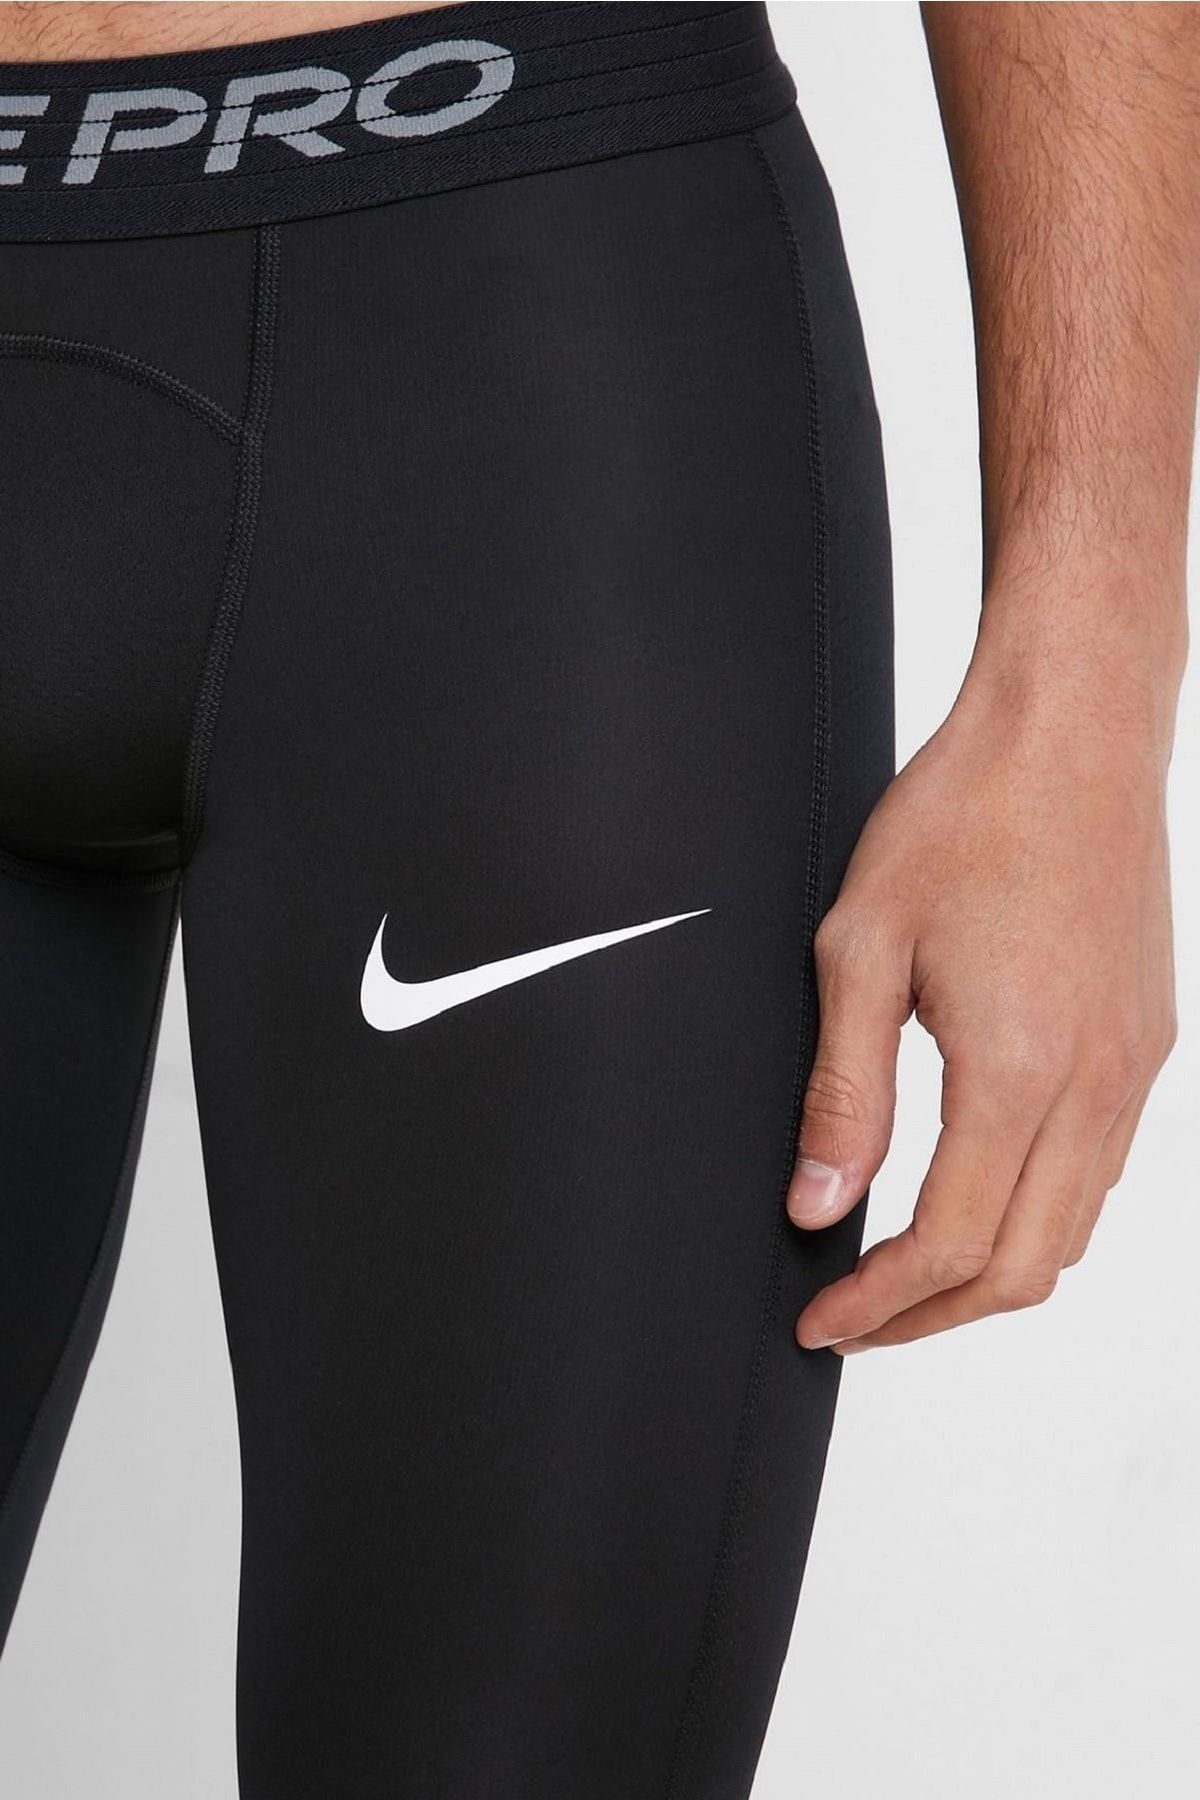 全新未剪牌Nike Pro Men's Tights 男裝黑色Black Base Layer Leggings